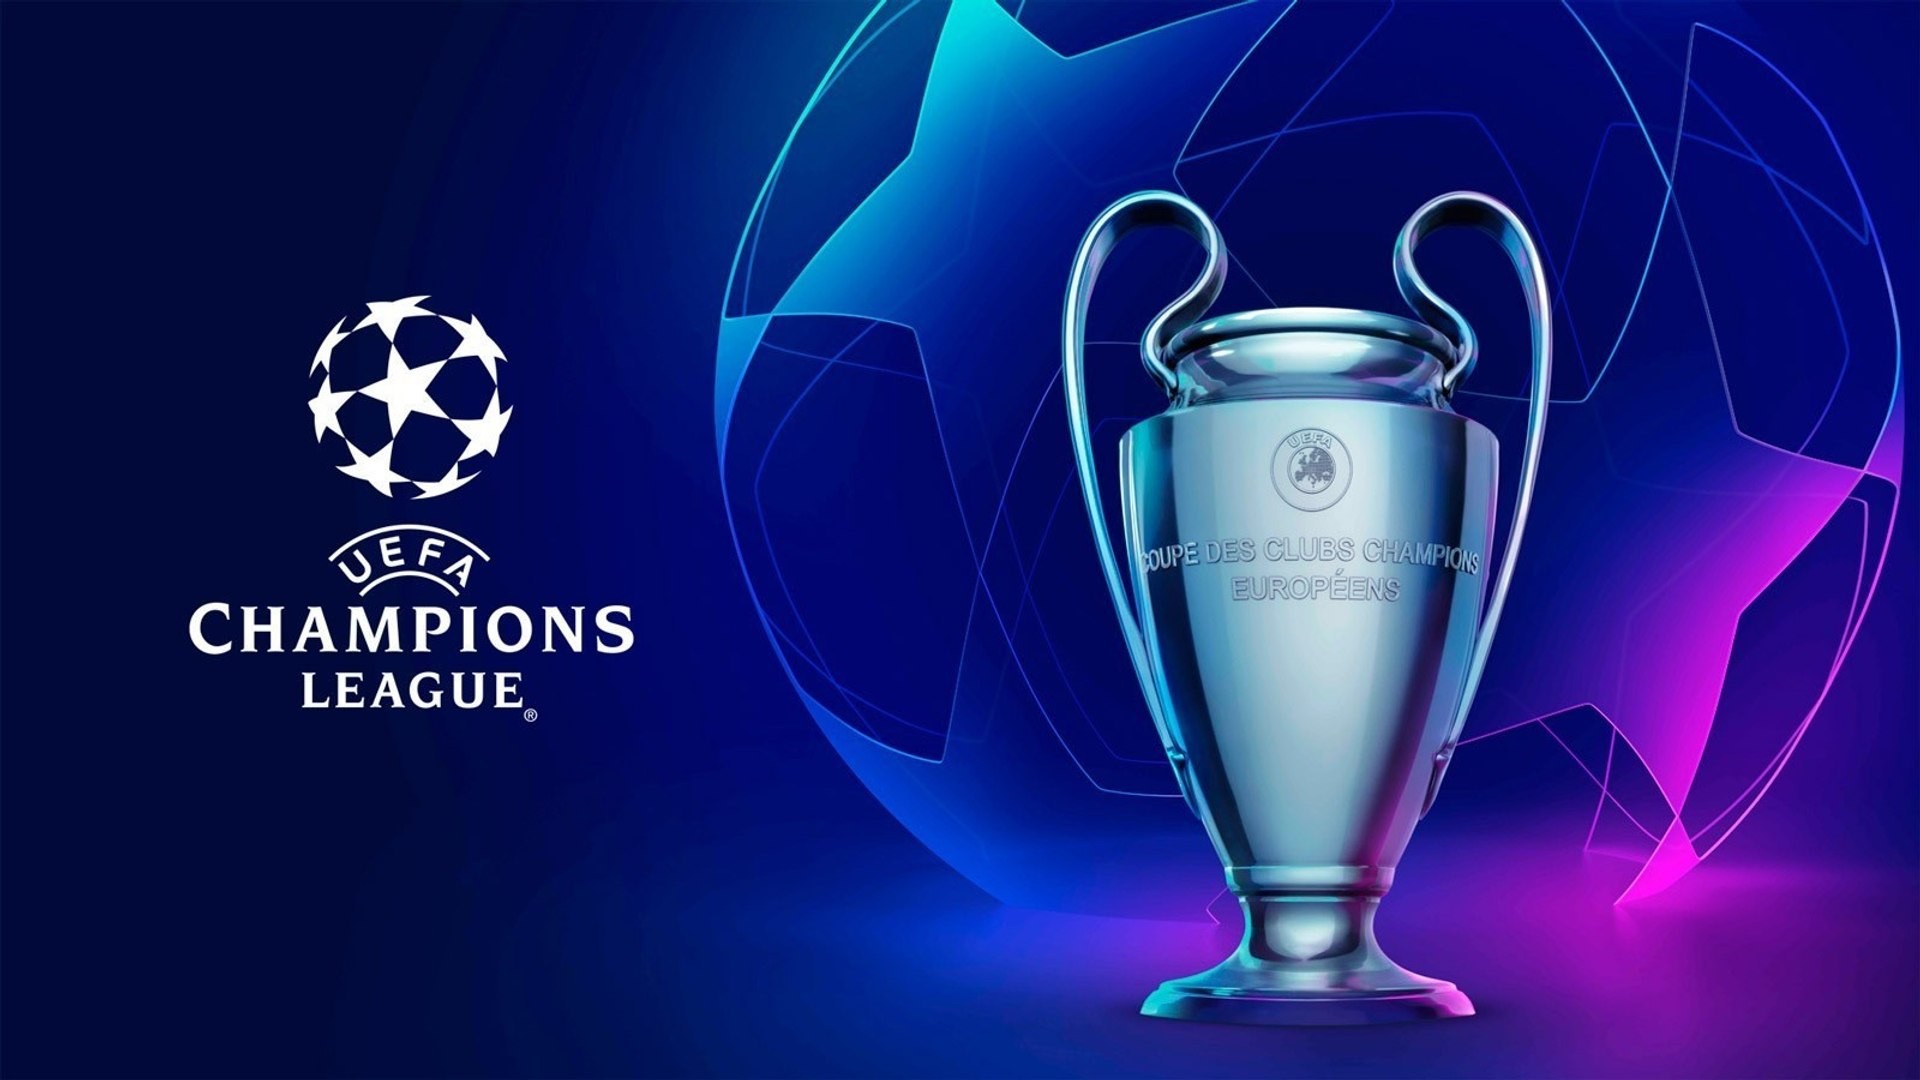 SBT Vídeos - UEFA Champions League